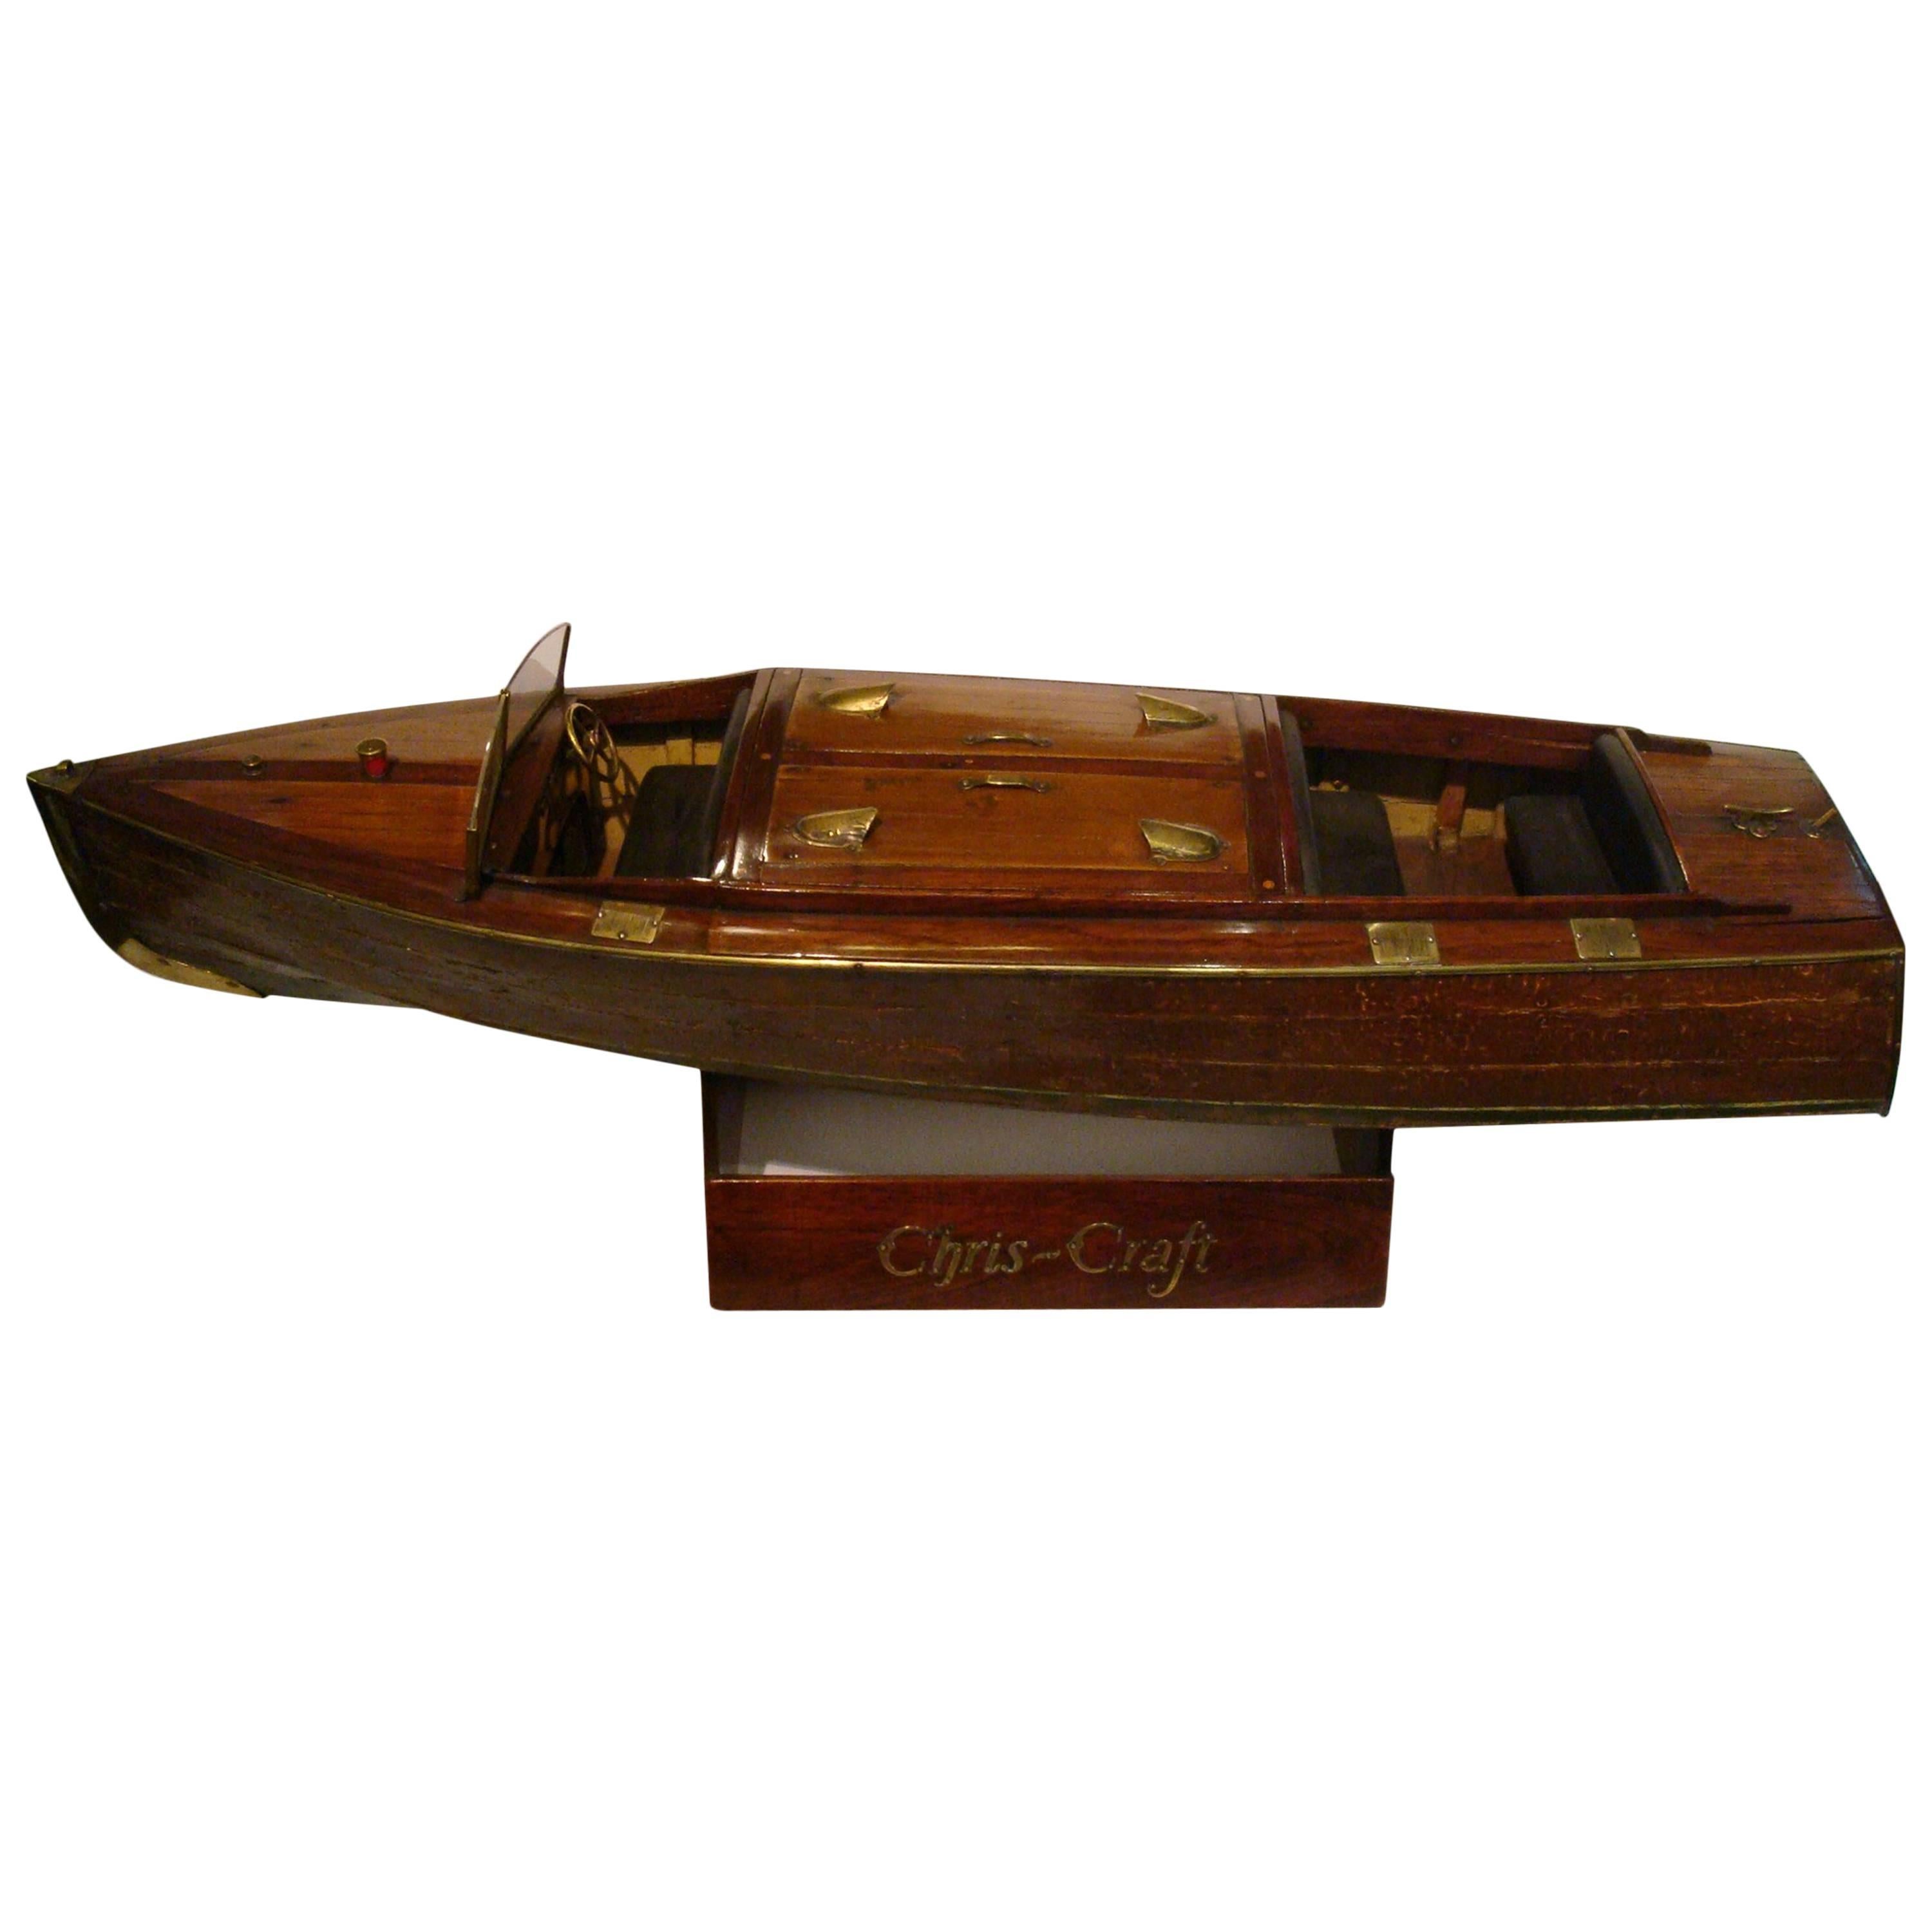 Chris Craft Speedboat Sales Model, circa 1930s Nautical